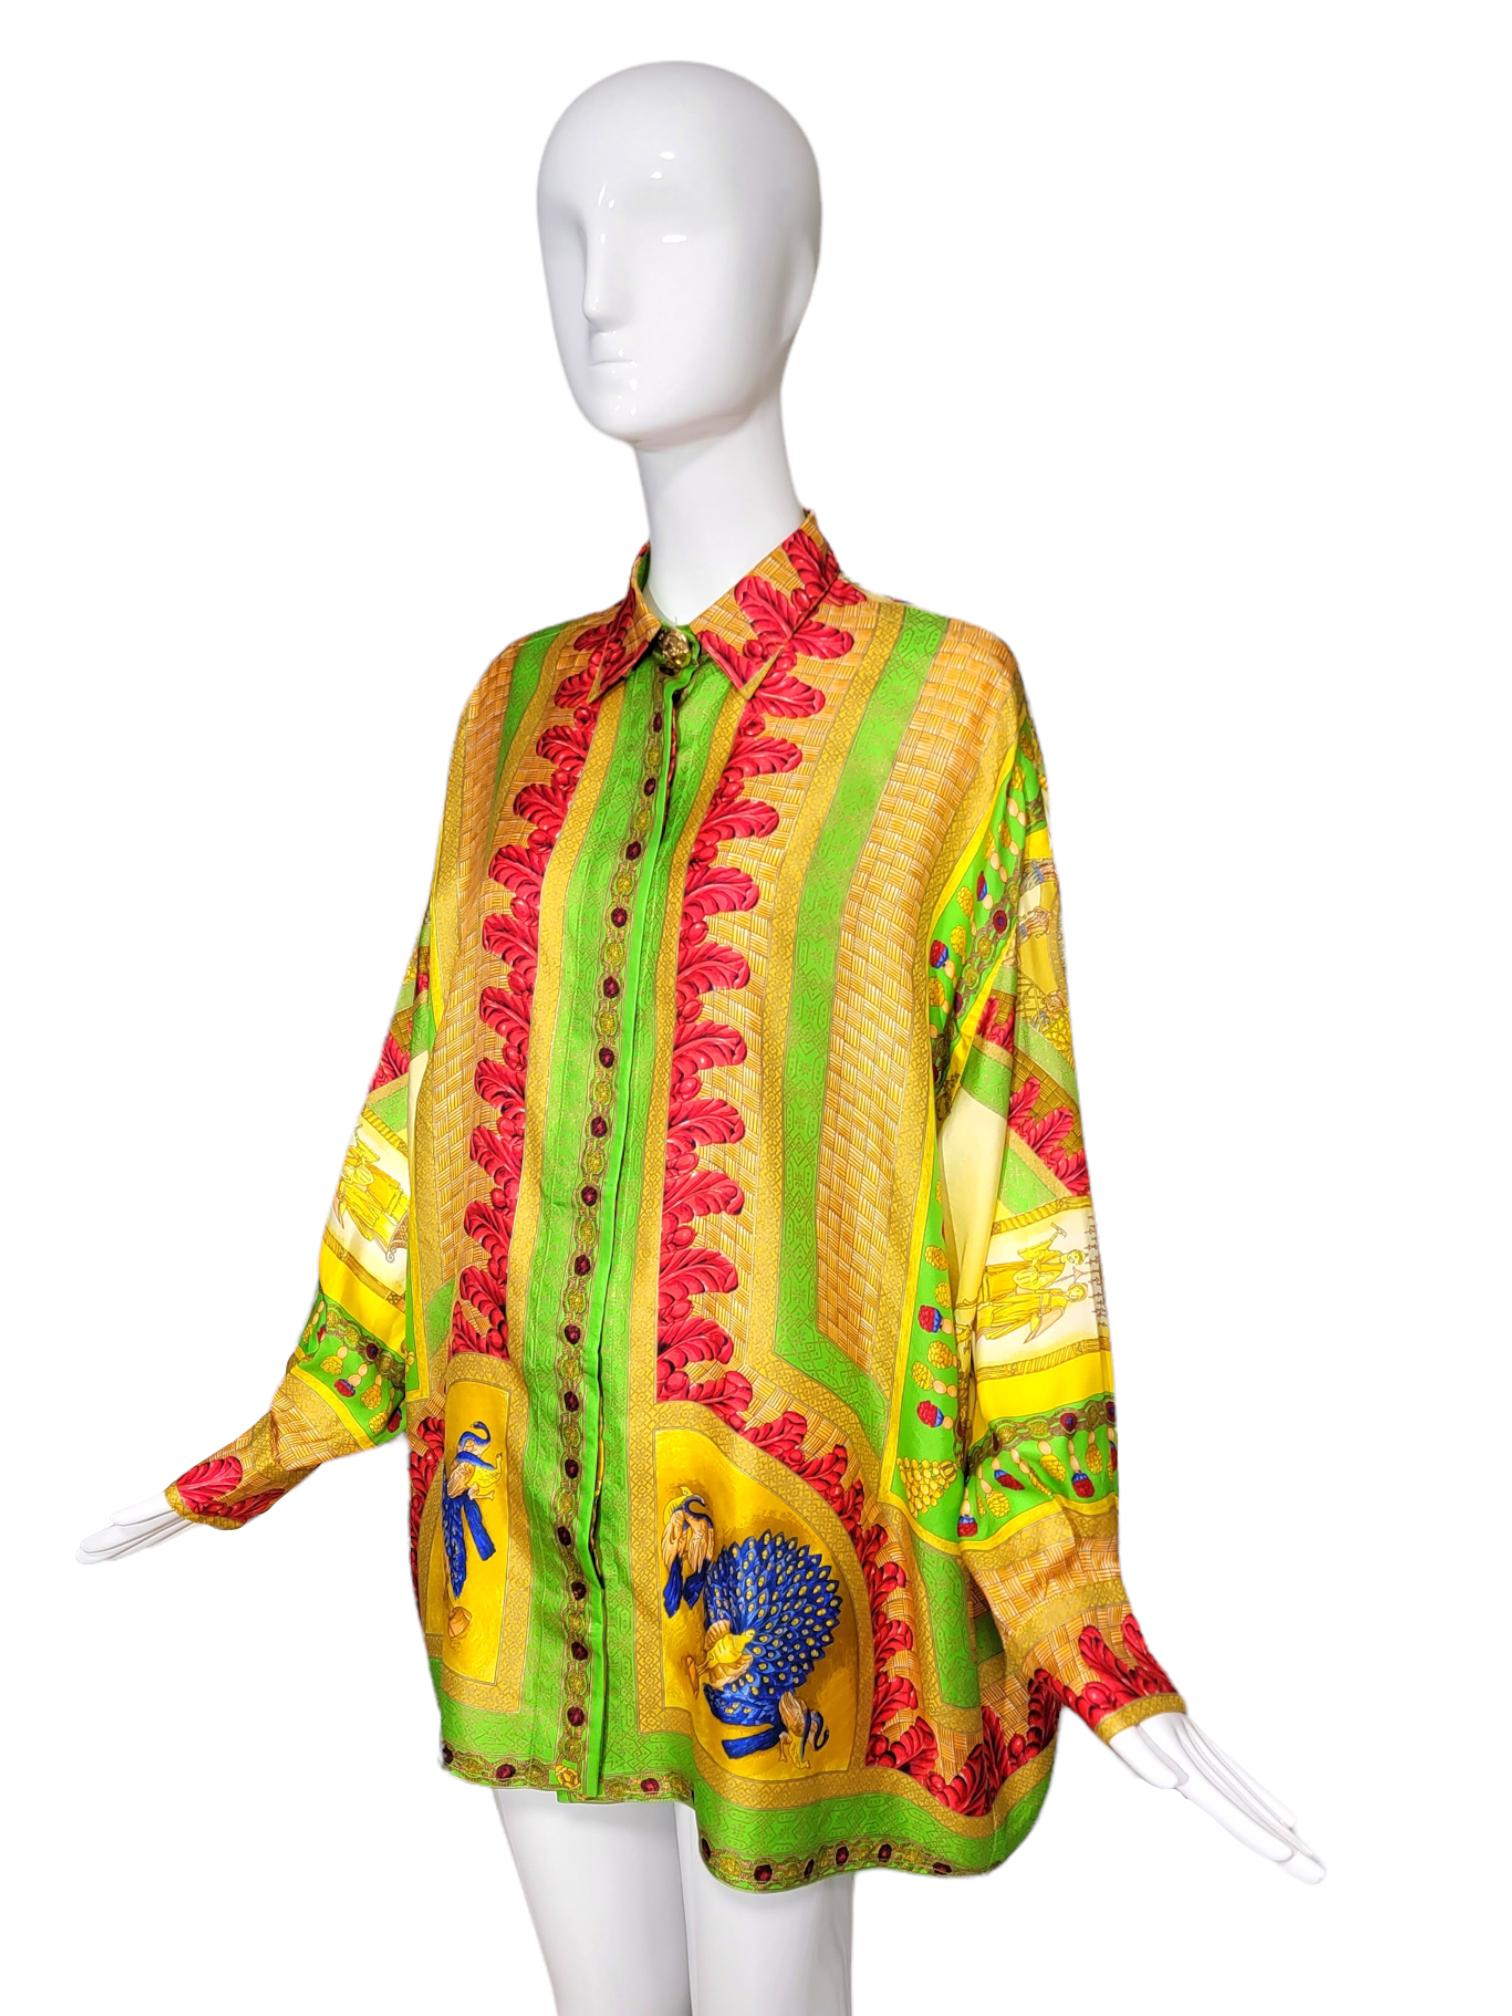 Gianni Versace Marco Polo Silk Shirt Chinese Emperor Peacocks 1992  1